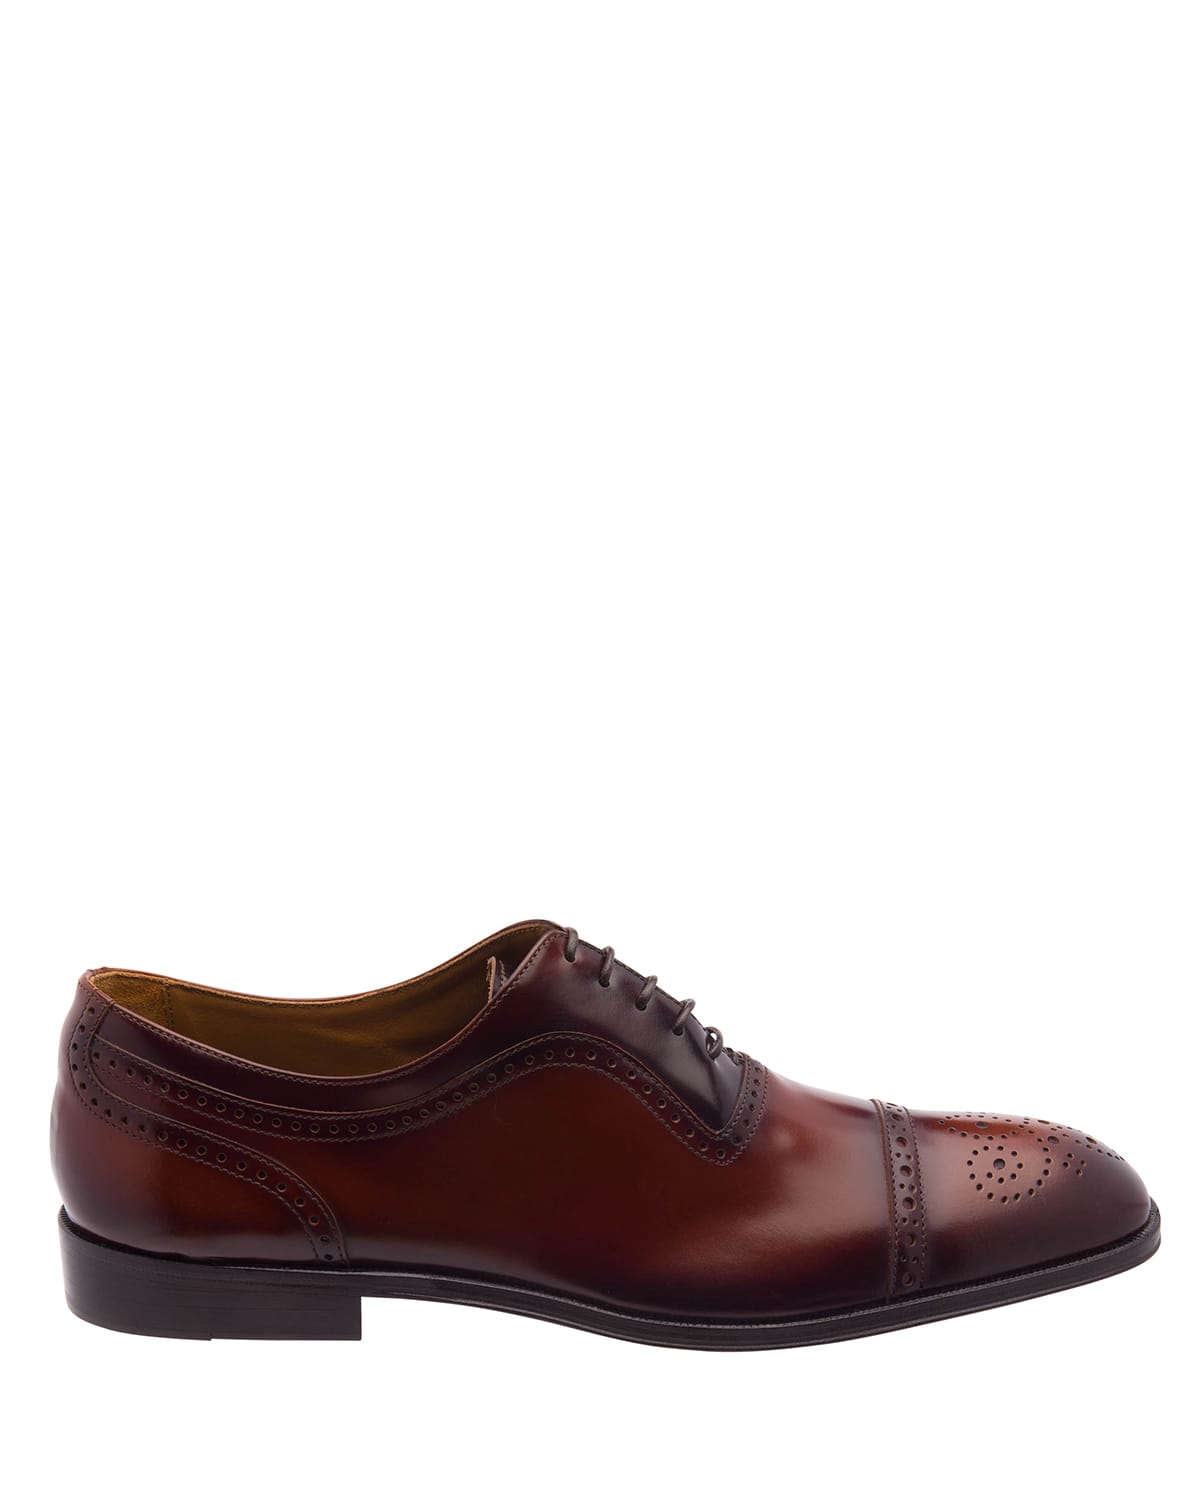 Bruno Magli Men's Ancona Brogue Leather Oxford Shoes